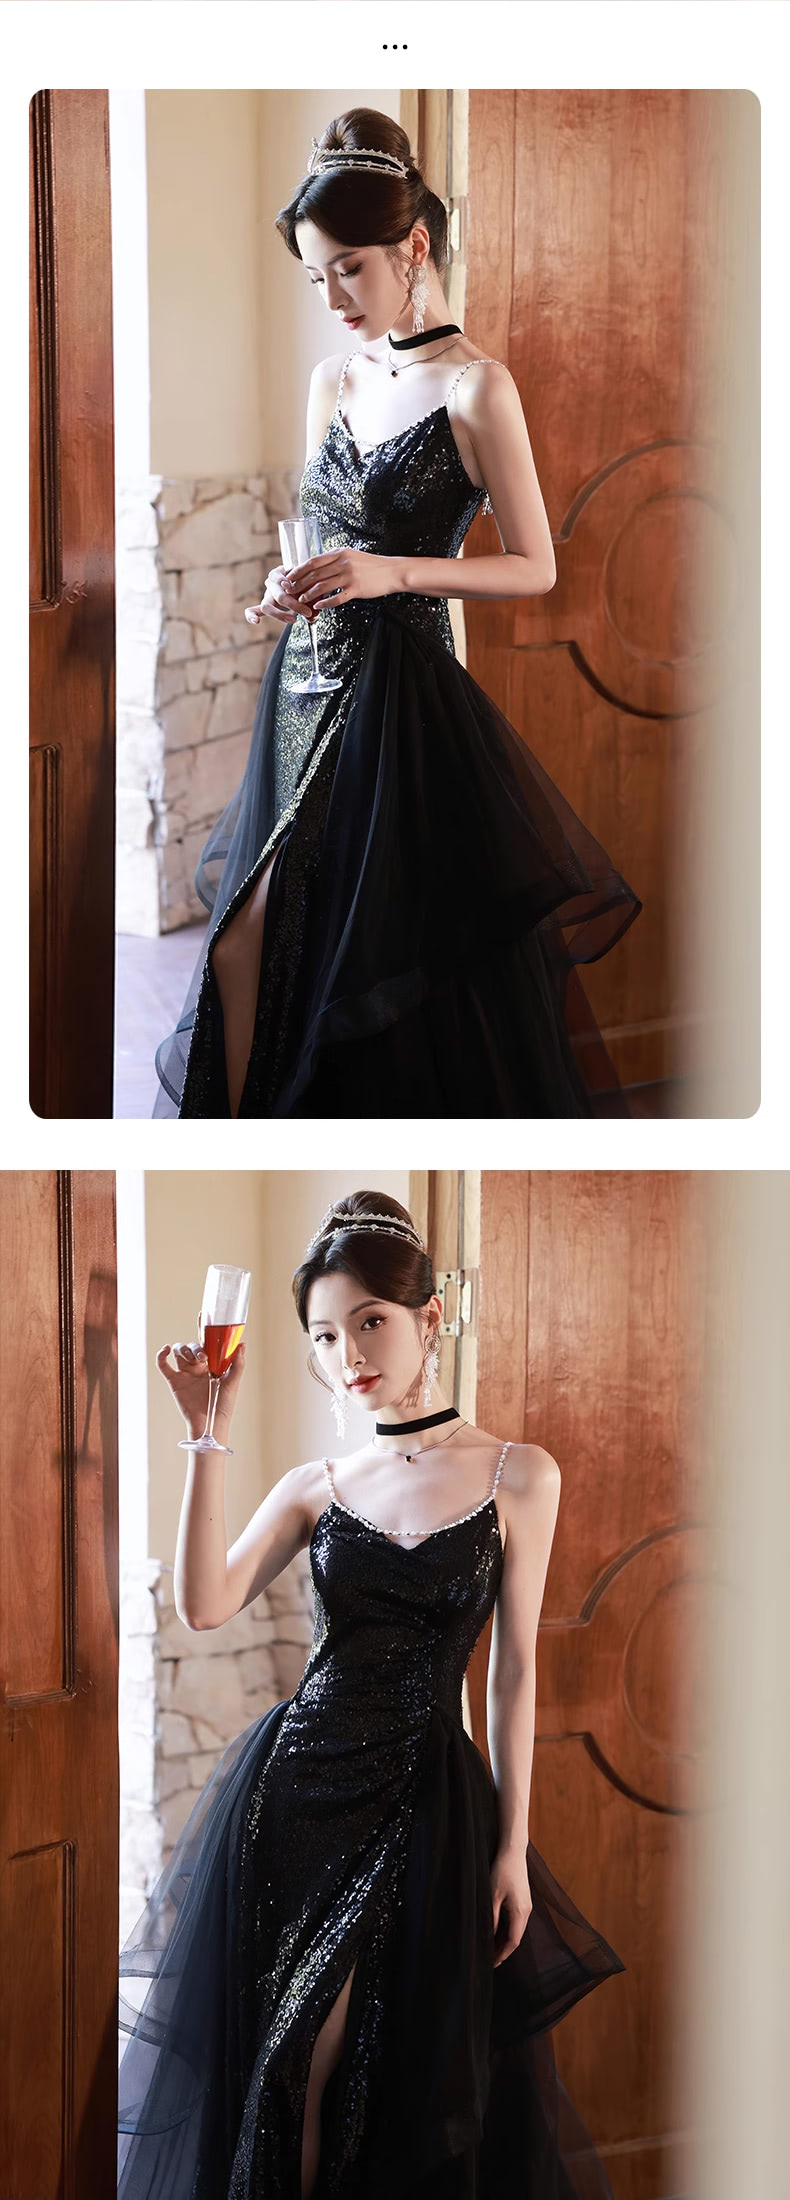 Luxury-Black-Banquet-Party-Evening-Long-Dress-Sleeveless-Ball-Gown11